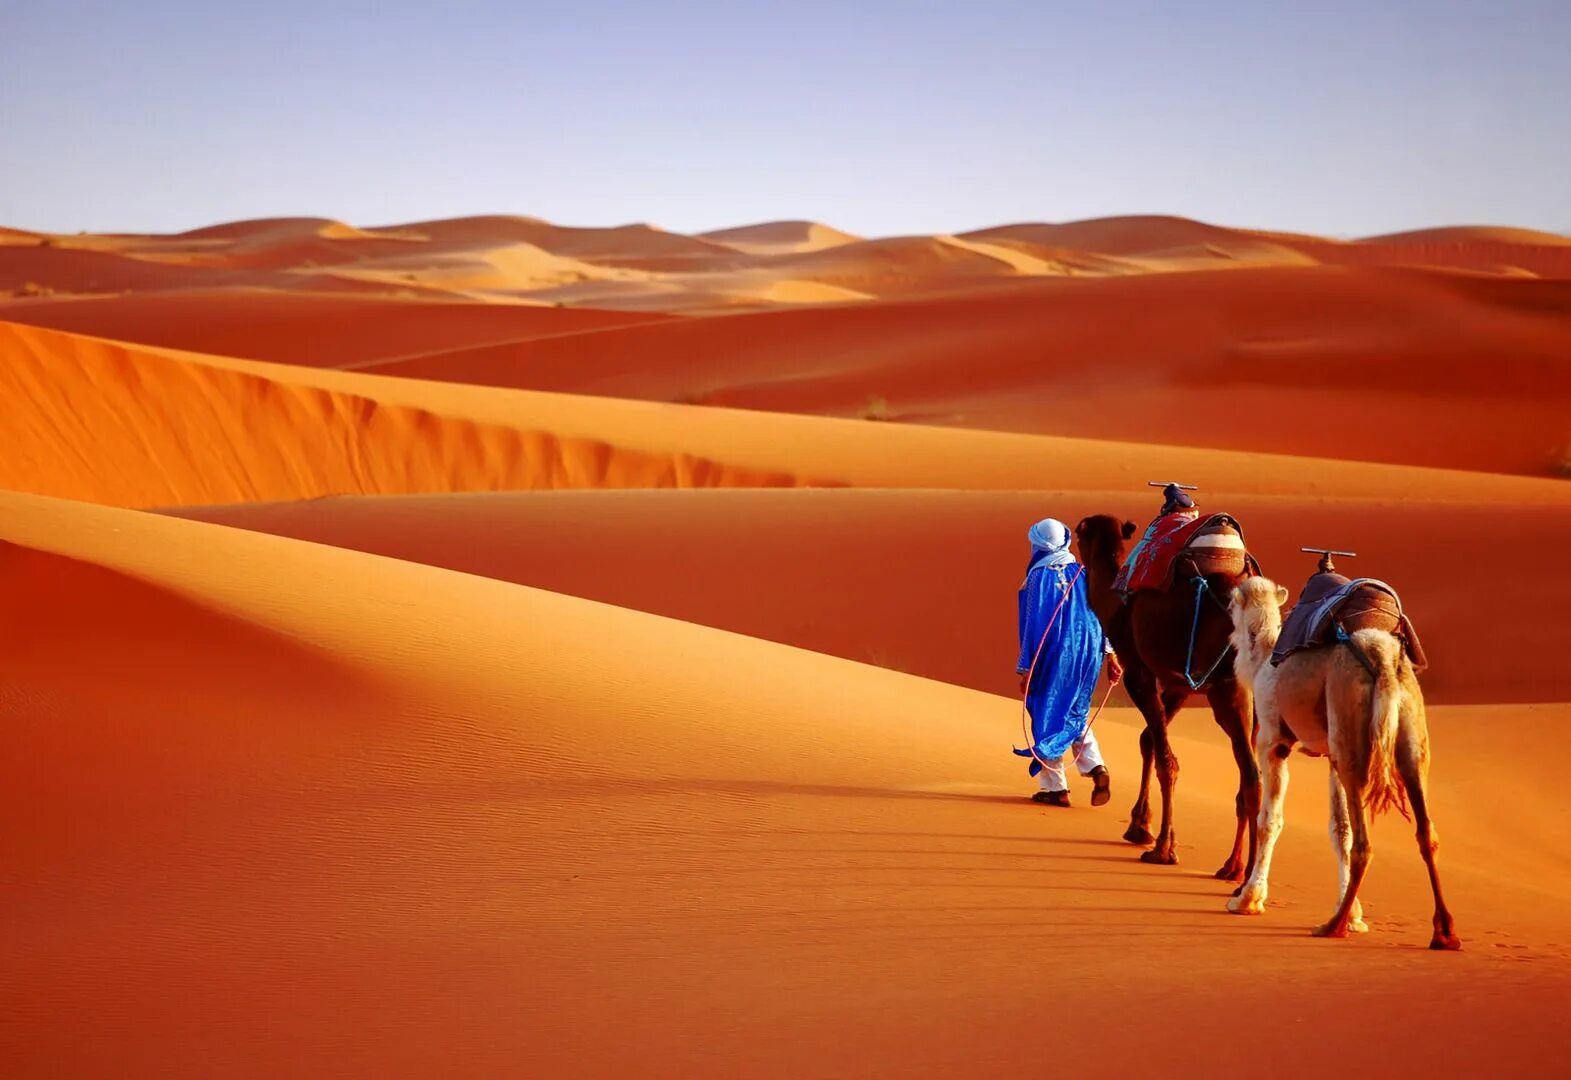 Мерзуга Марокко. Марокко пустыня Караваны. Караван марокканских верблюдов дромедаров. Марокко сахара. Тема караван